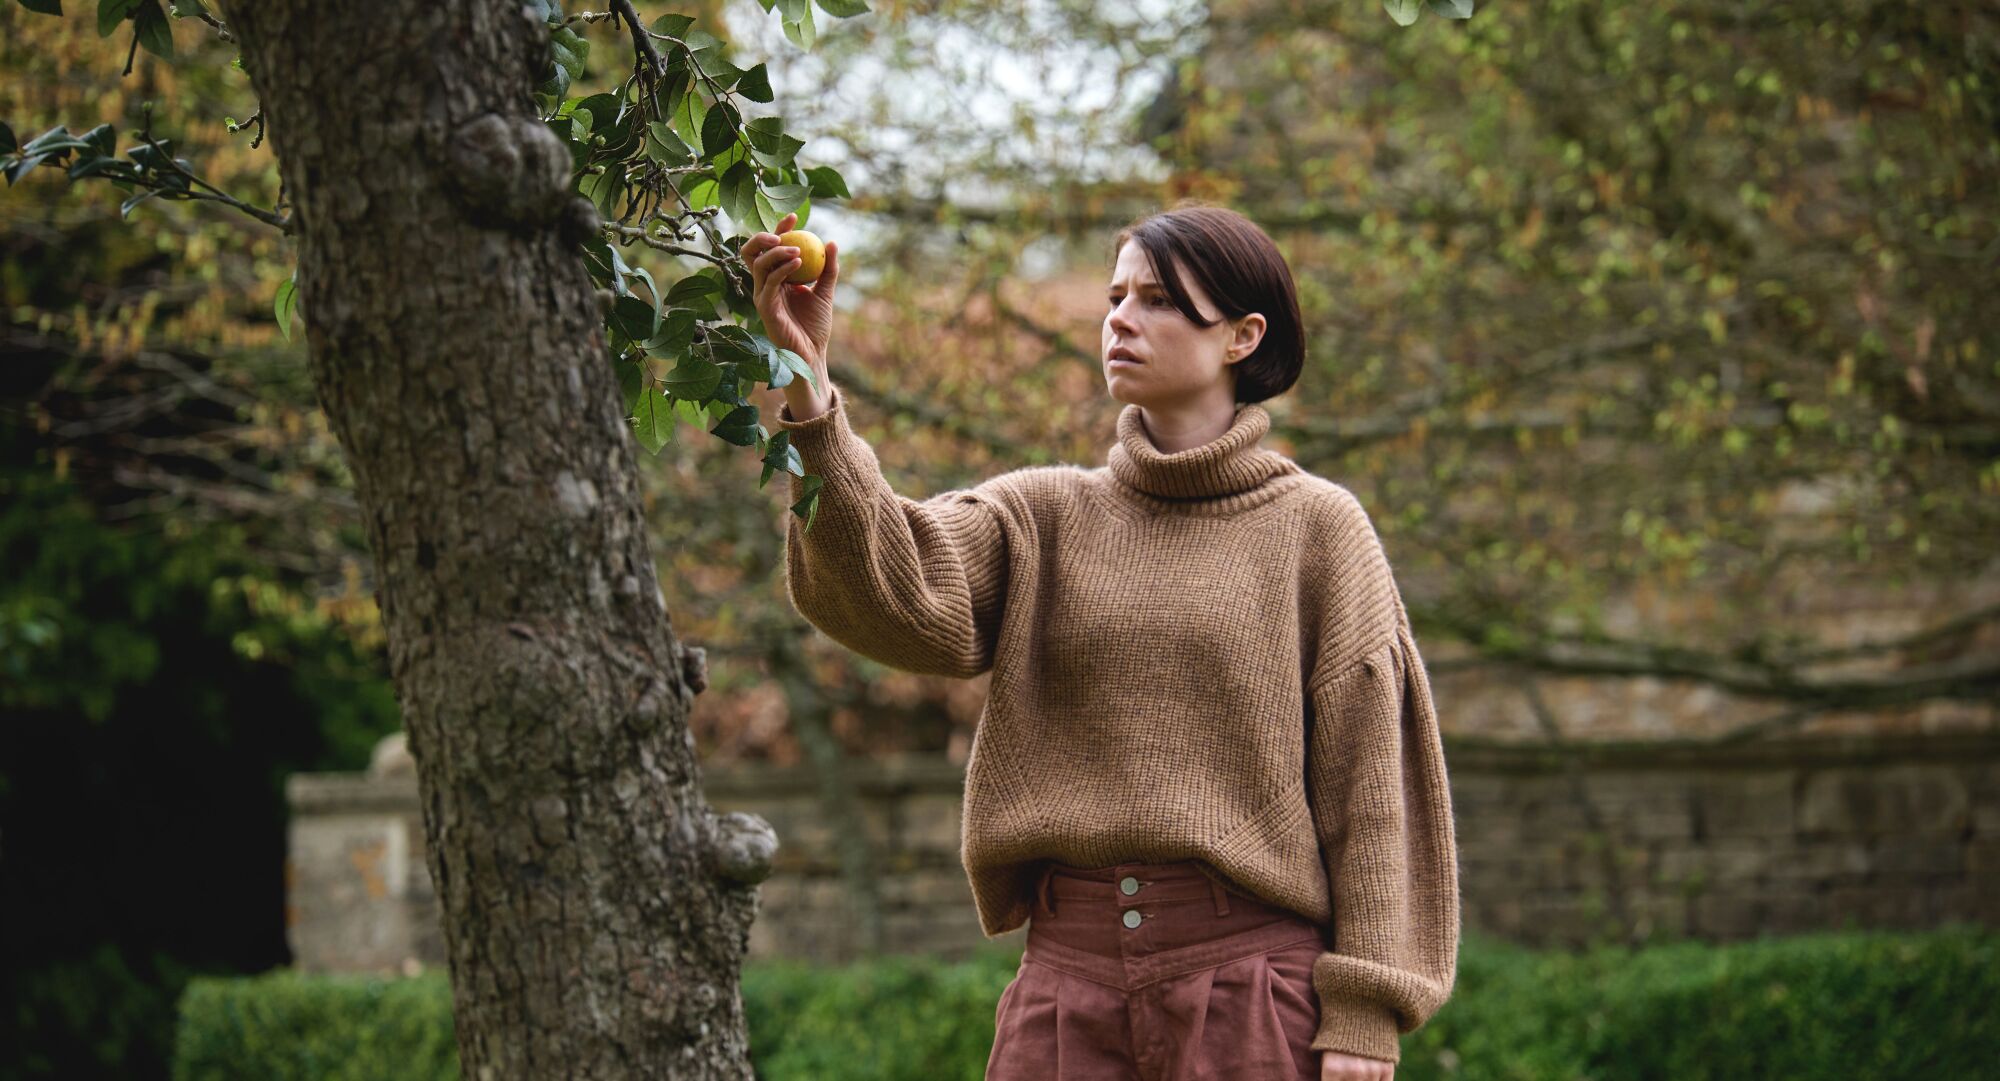 A woman reaches toward a fruit on a tree.